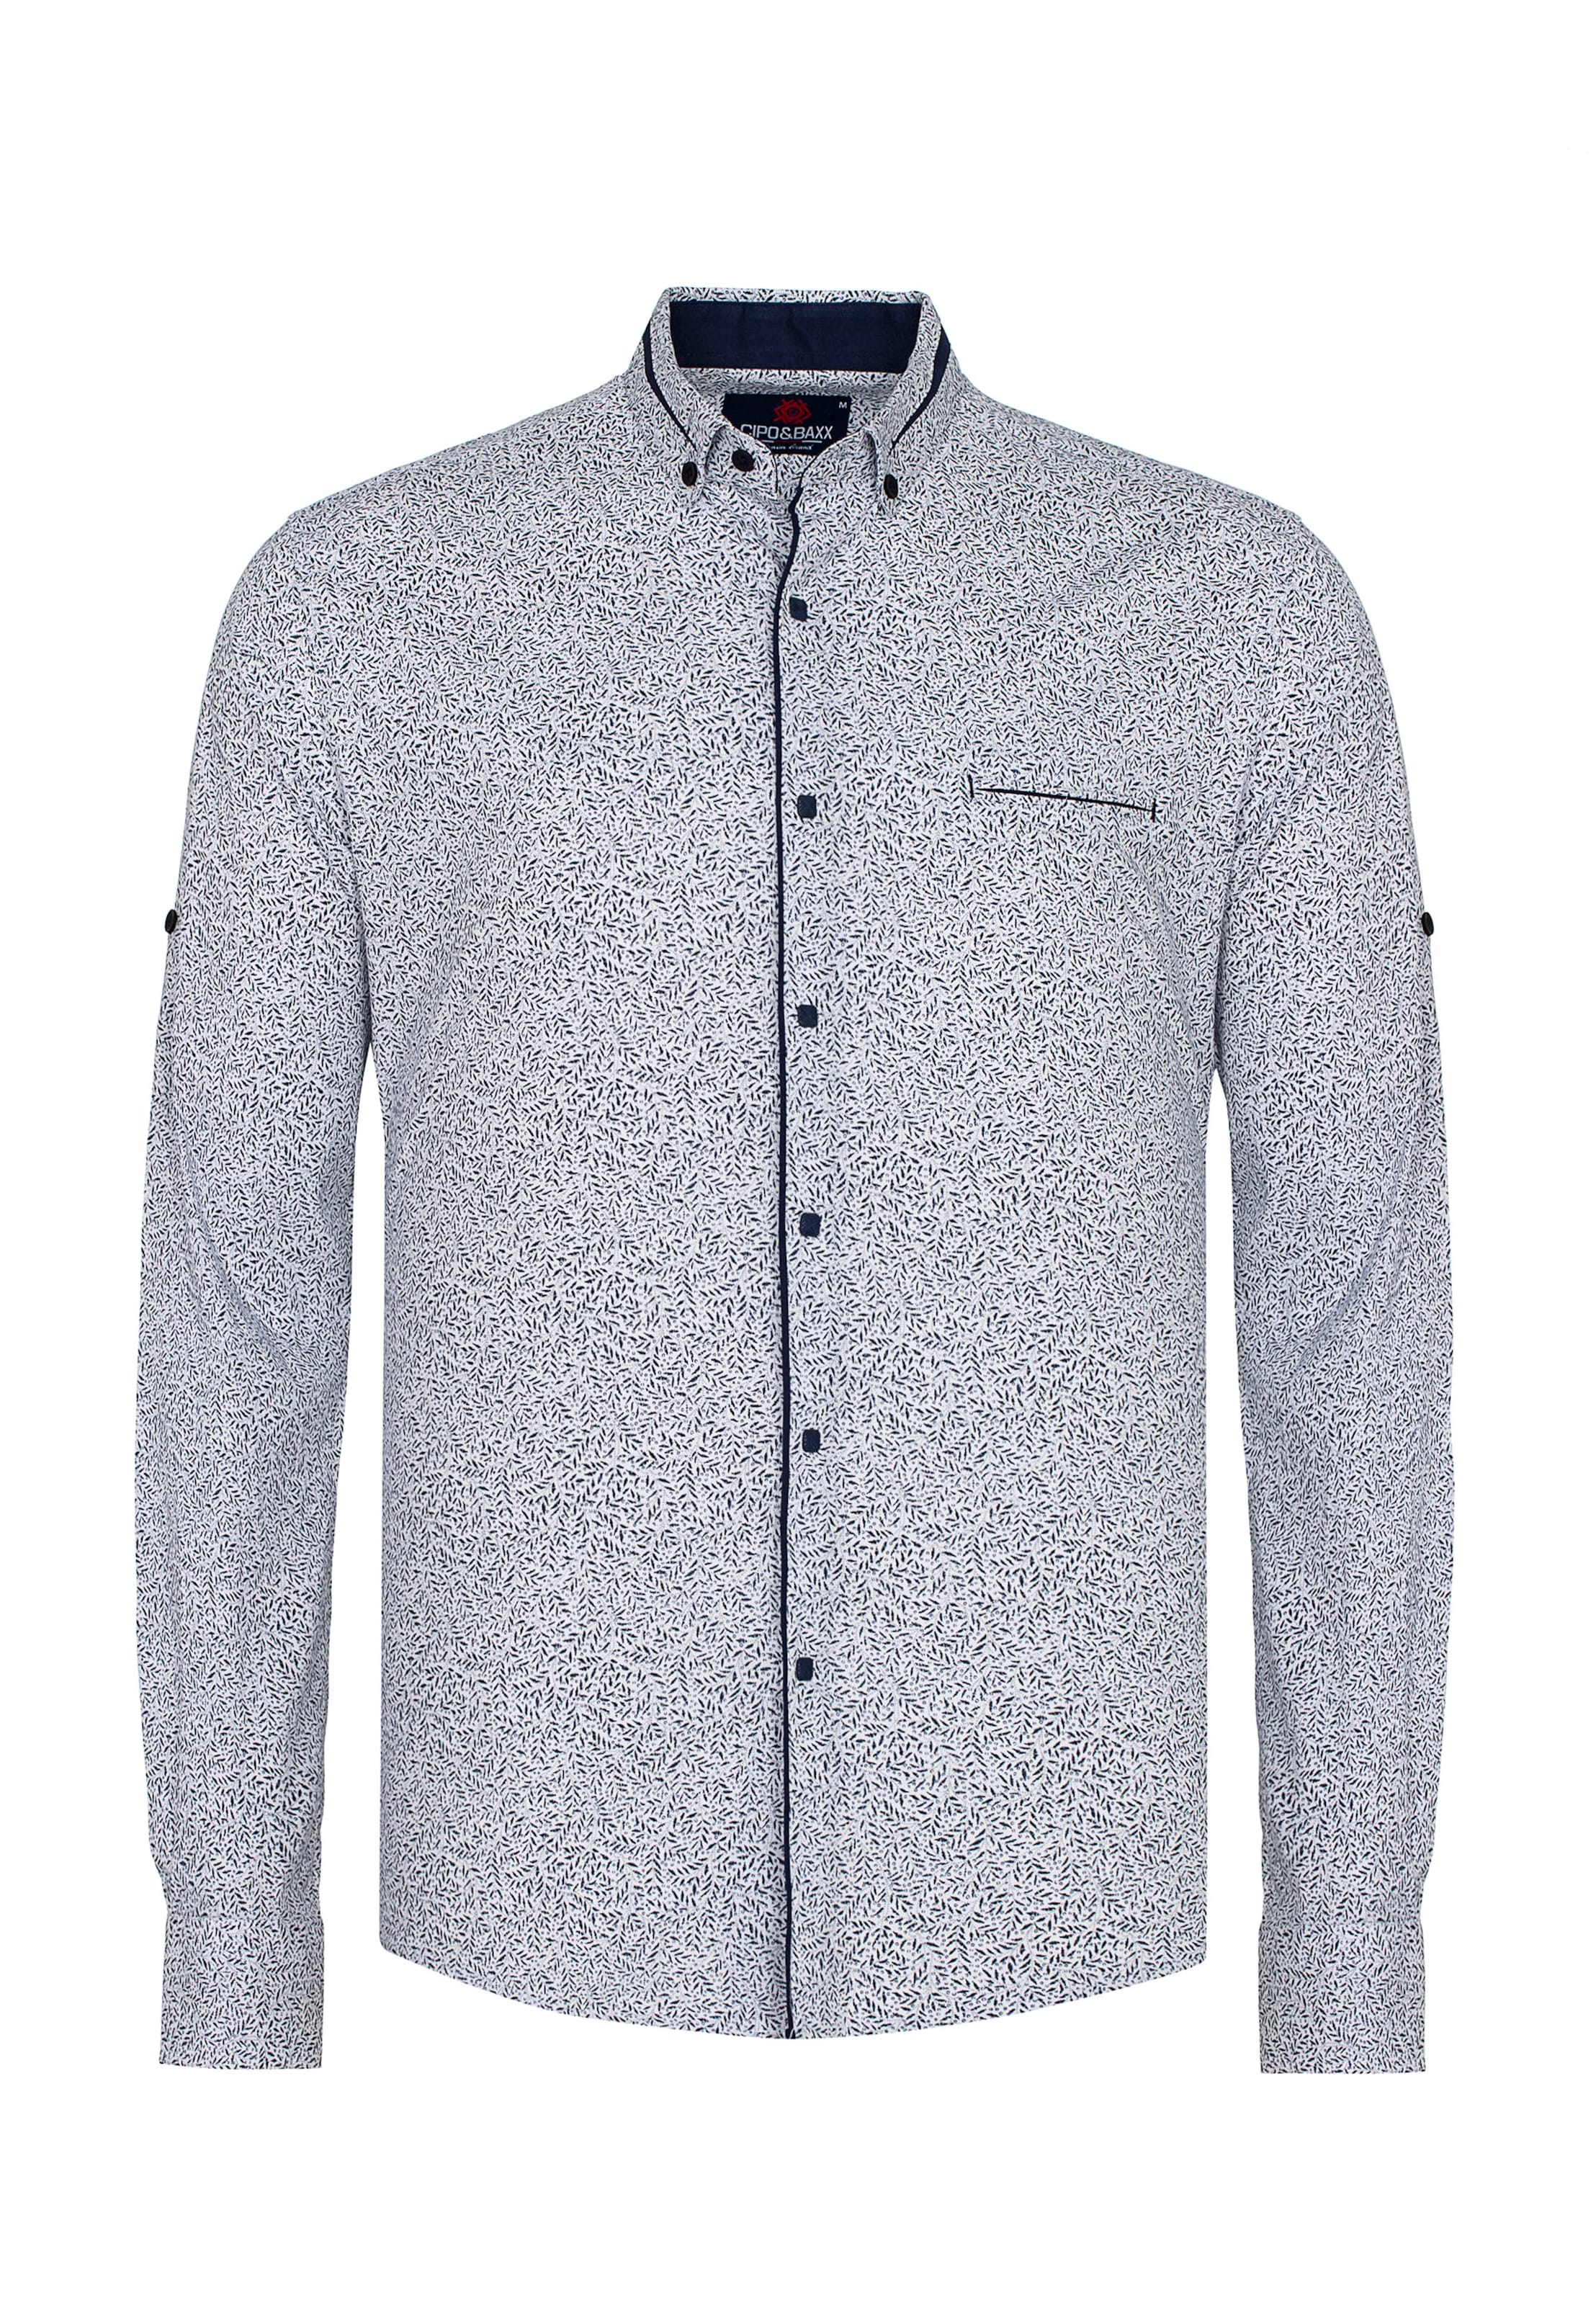 Männer Hemden CIPO & BAXX Hemd 'MILFORD' in Blau, Weiß - TF87019